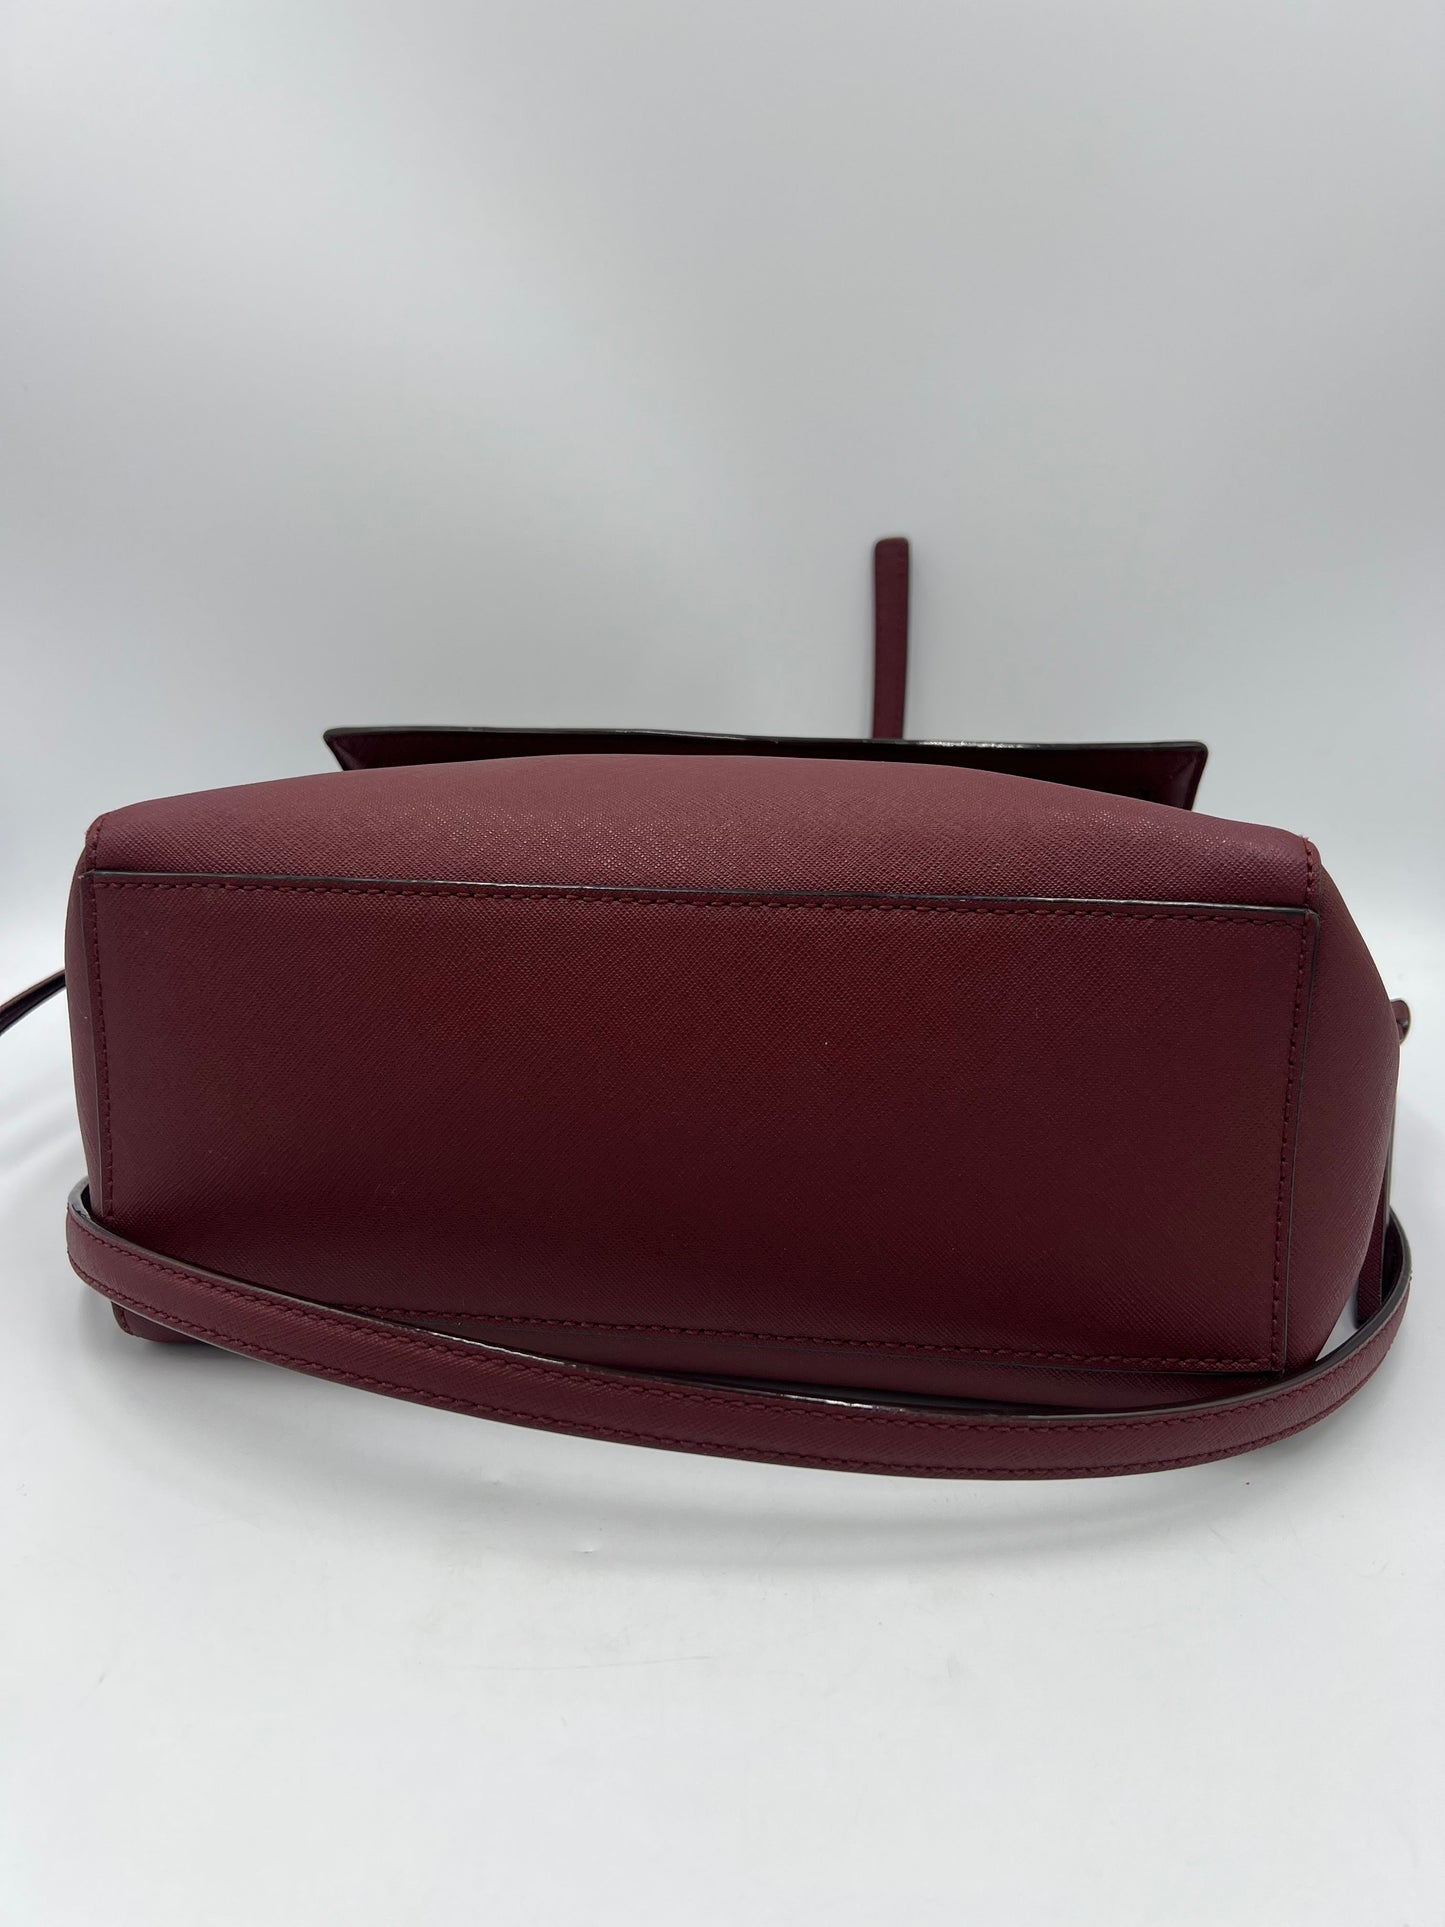 Handbag Designer By Kate Spade